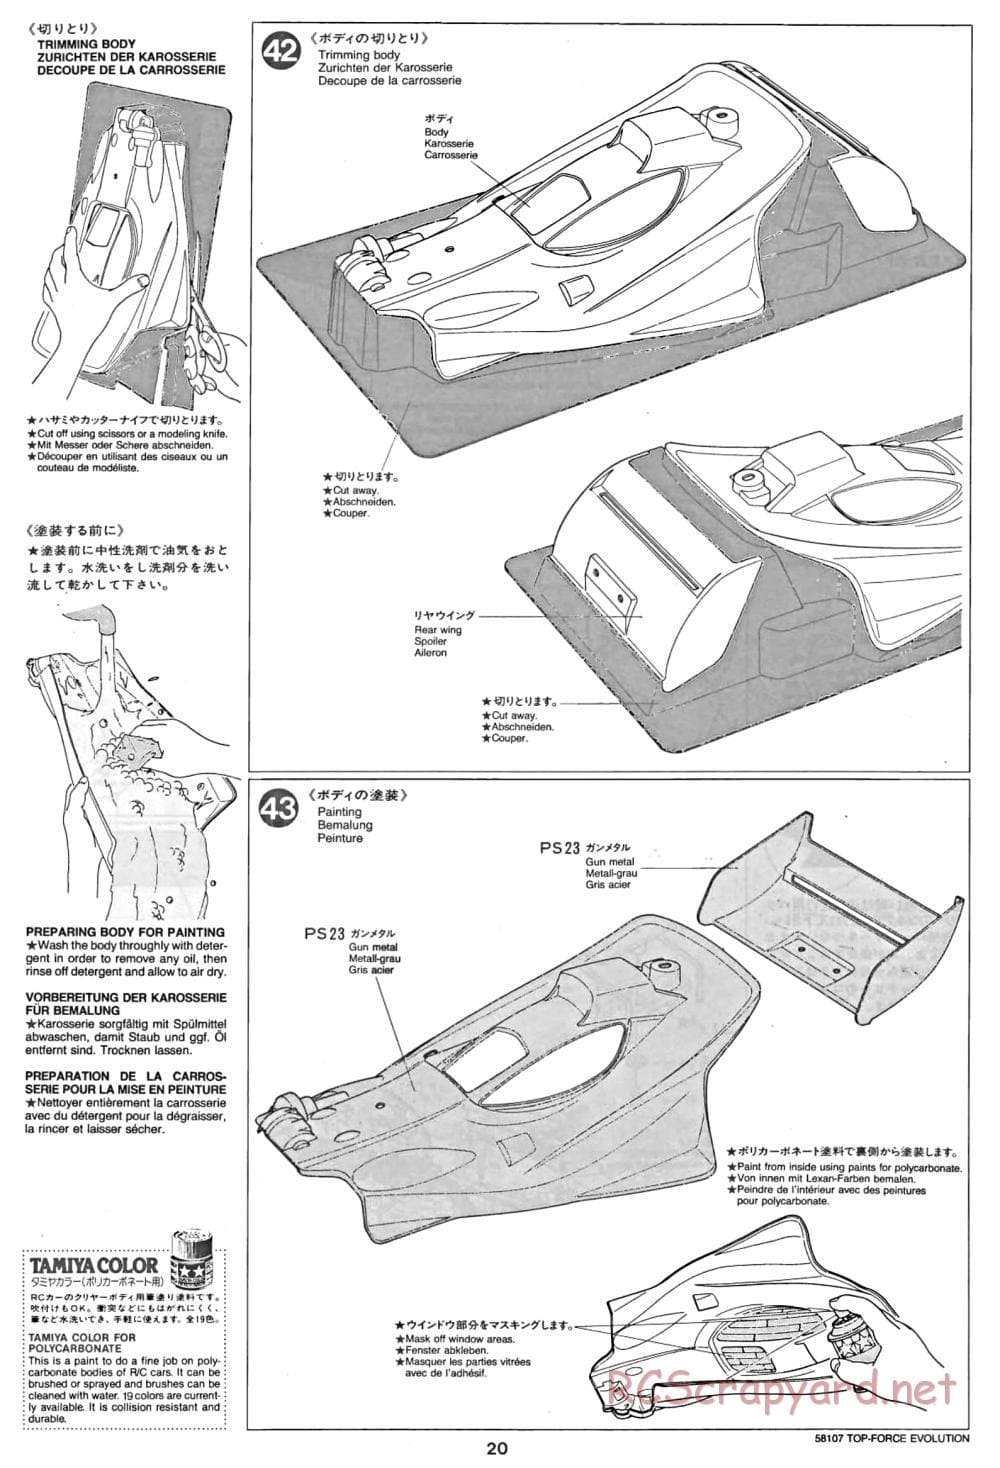 Tamiya - Top Force Evolution Chassis - Manual - Page 20